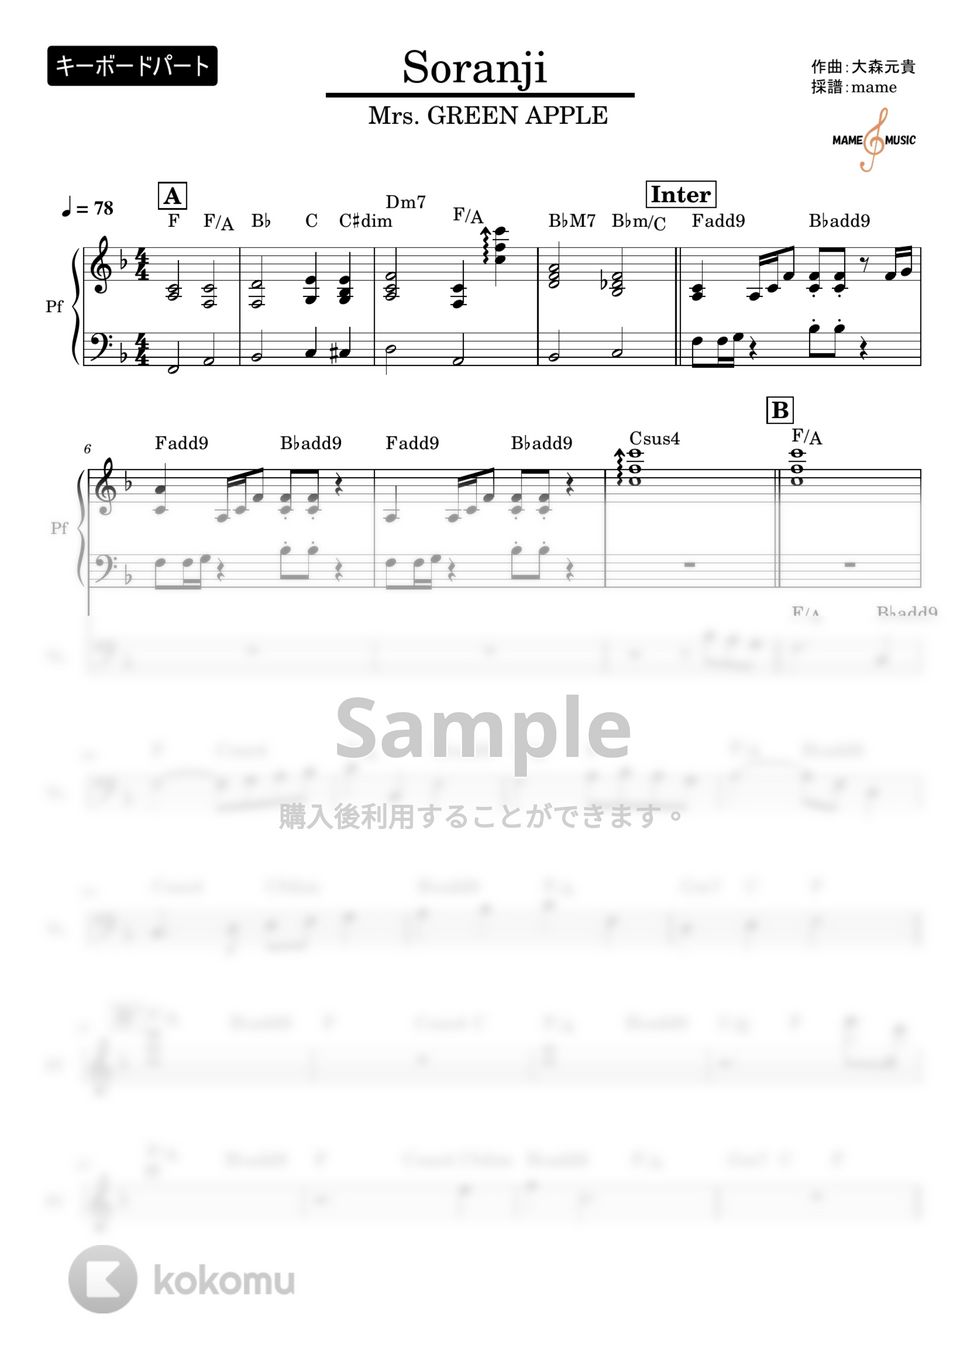 Mrs. GREEN APPLE - SORANJI (キーボードパート楽譜です。) by mame